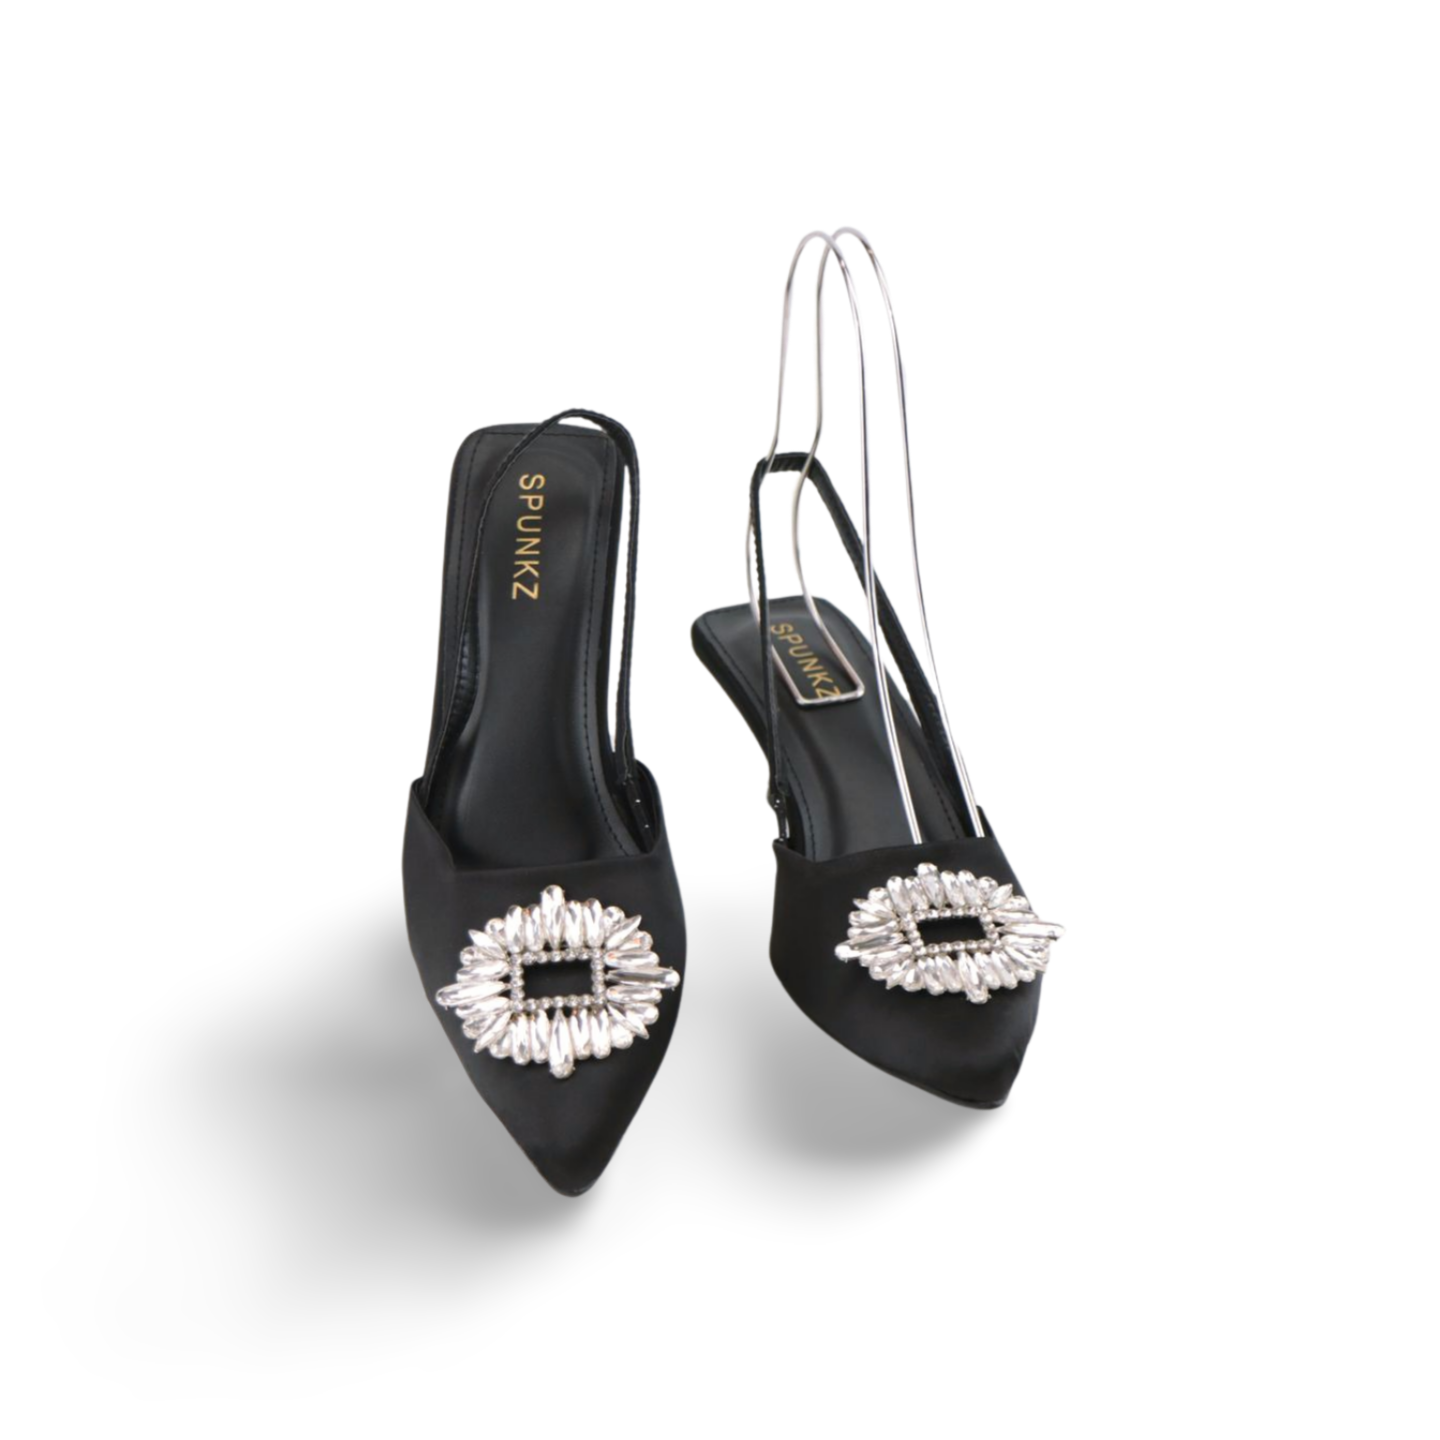 Black Satin Rhinestone Buckle Stiletto Heels - Elegant and Dazzling for Any Occasion